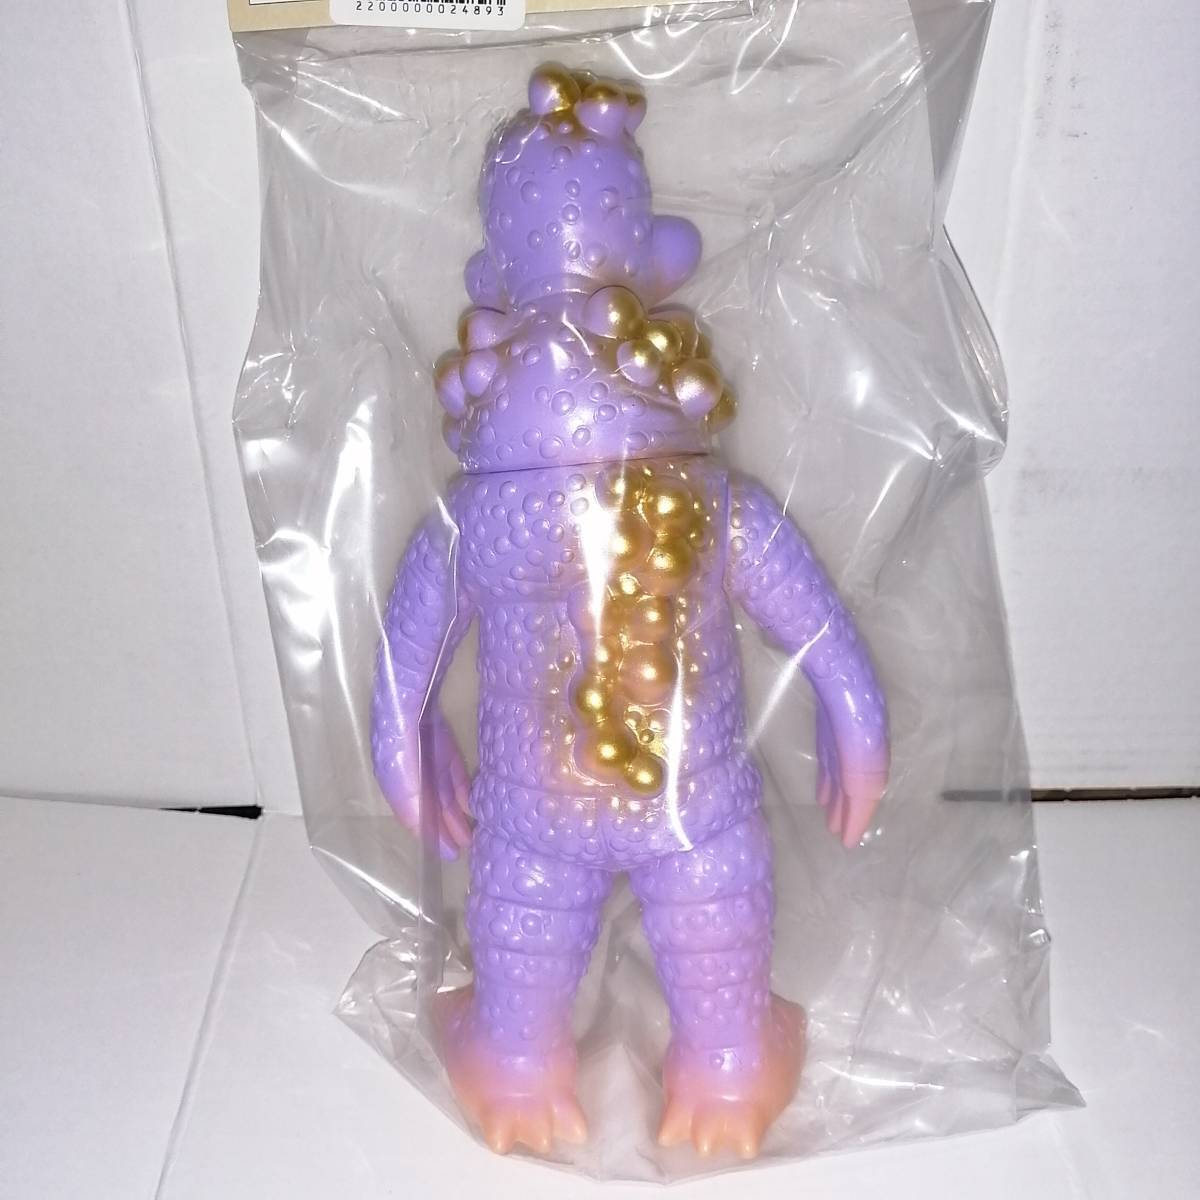 BULLMARKbruma.k sofvi Live King лиловый осмотр Ultraman Taro Godzilla M1 номер maru солнечный Bear модель meti com игрушка 